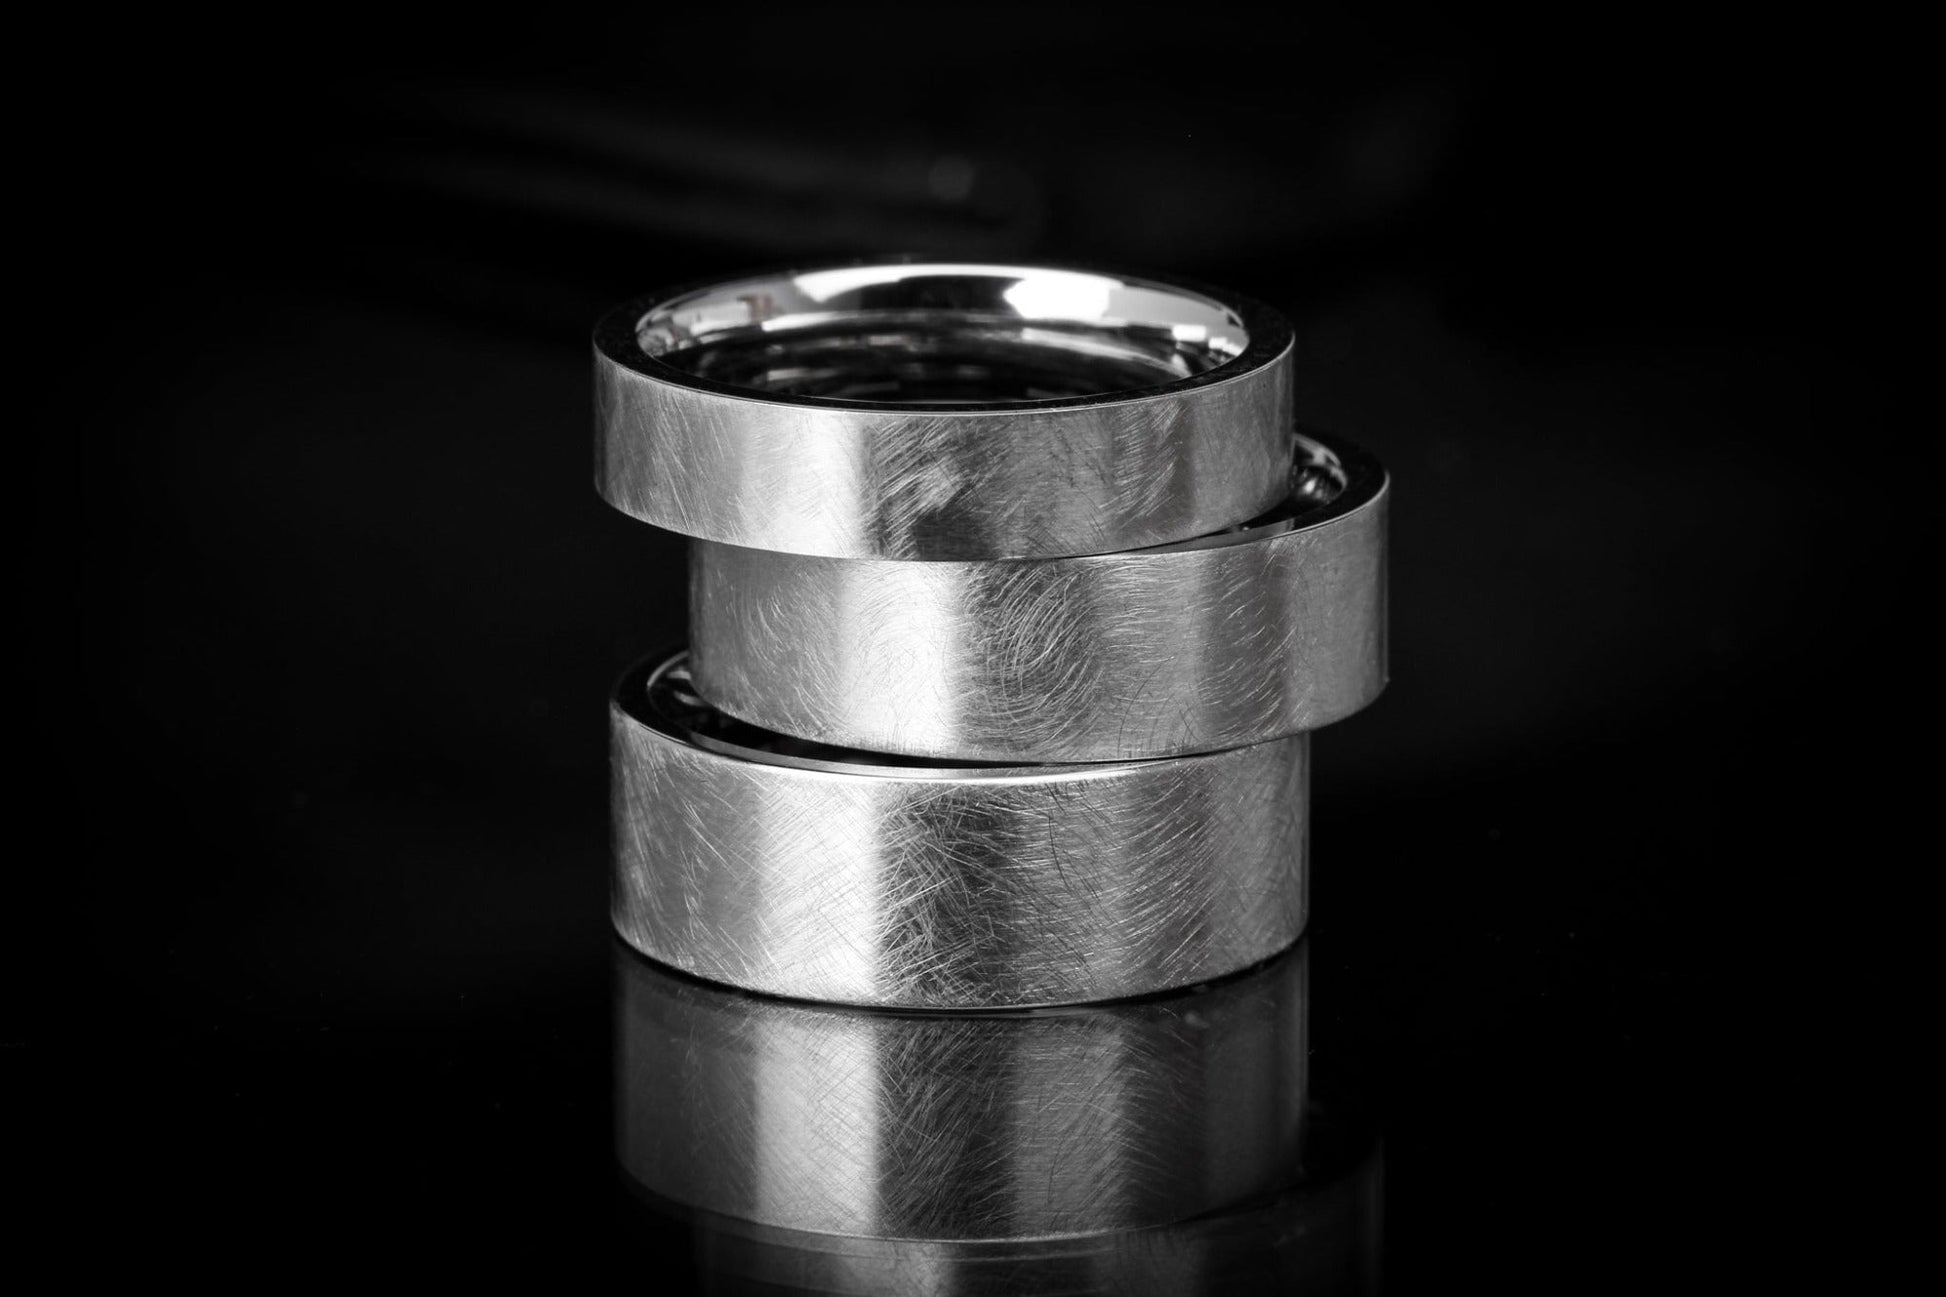 "Brüns" Etched Titanium Ring Rings 